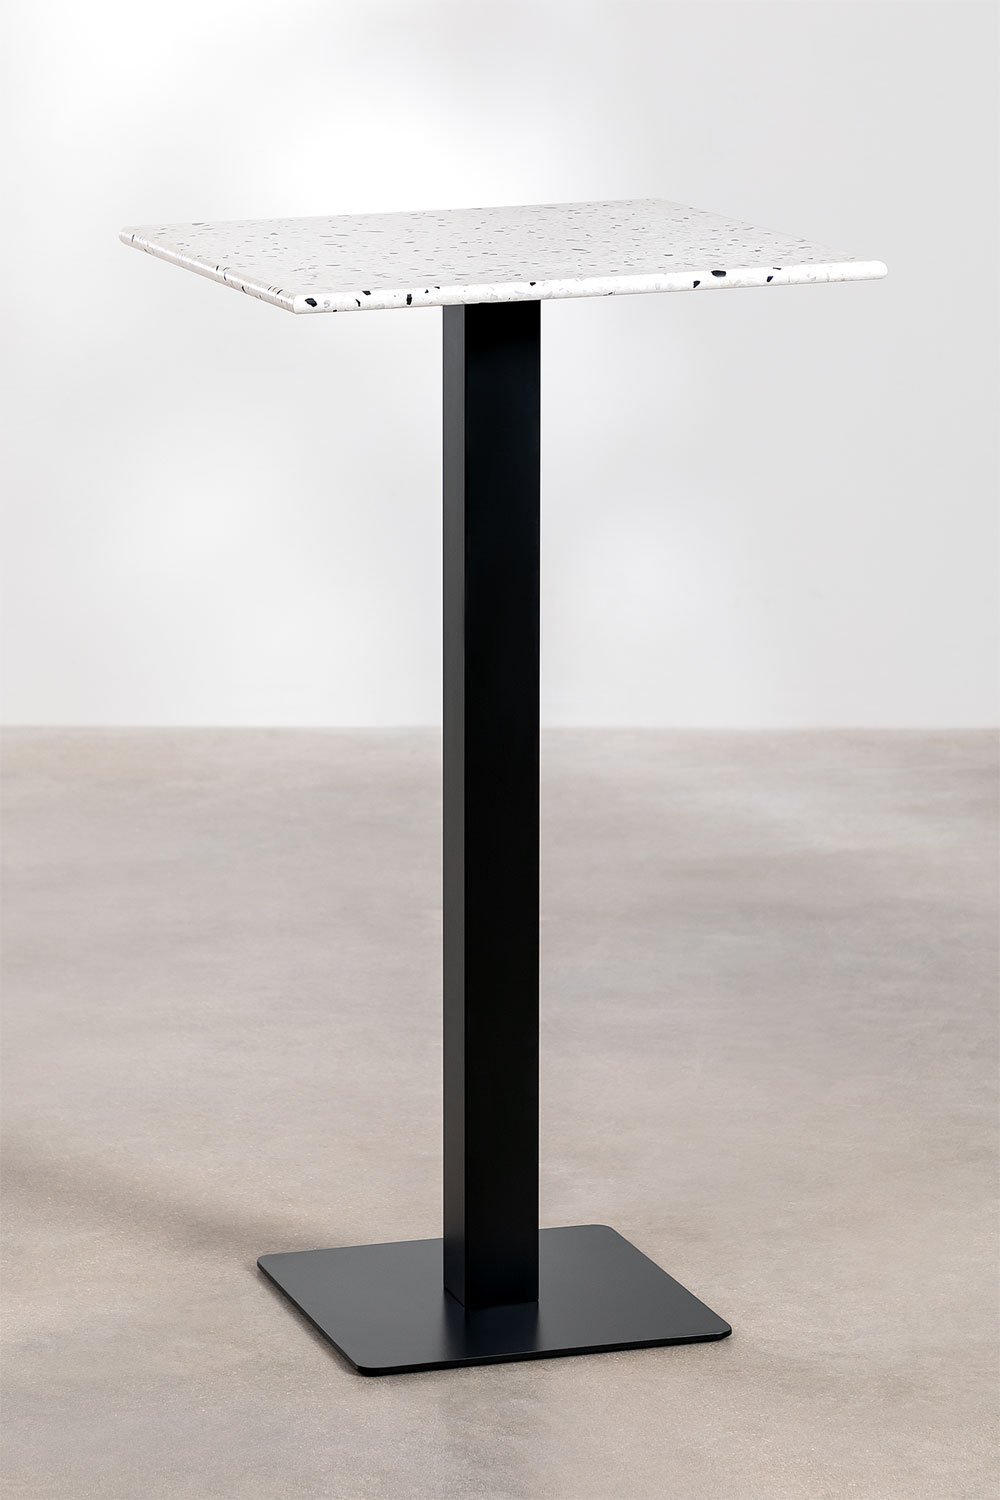 Table Mange-debout Carrée en Terrazzo (60x60 cm) Praline, image de la galerie 1